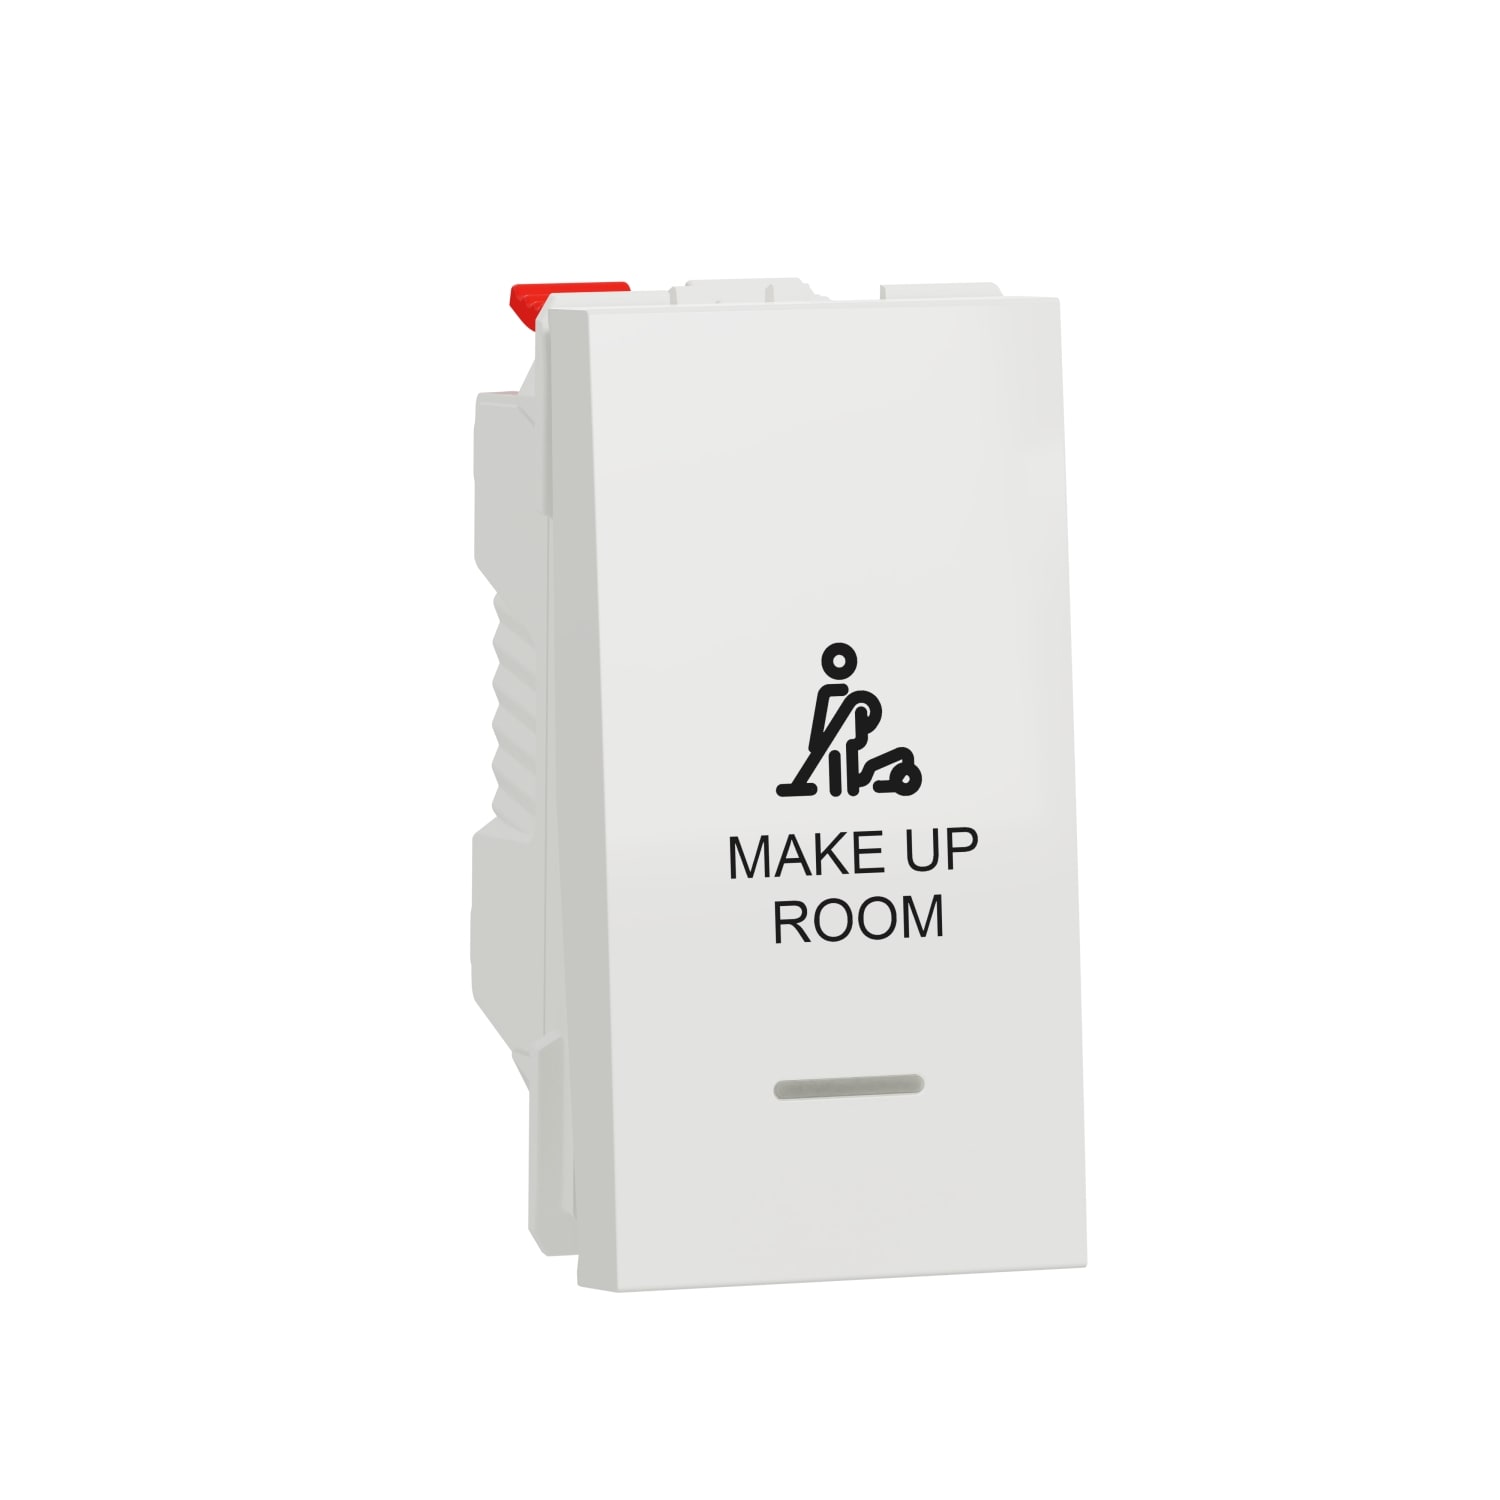 Schneider Electric - Unica - commande pour chambre hotel - symbole MUR - 1 mod - Blanc - meca seul